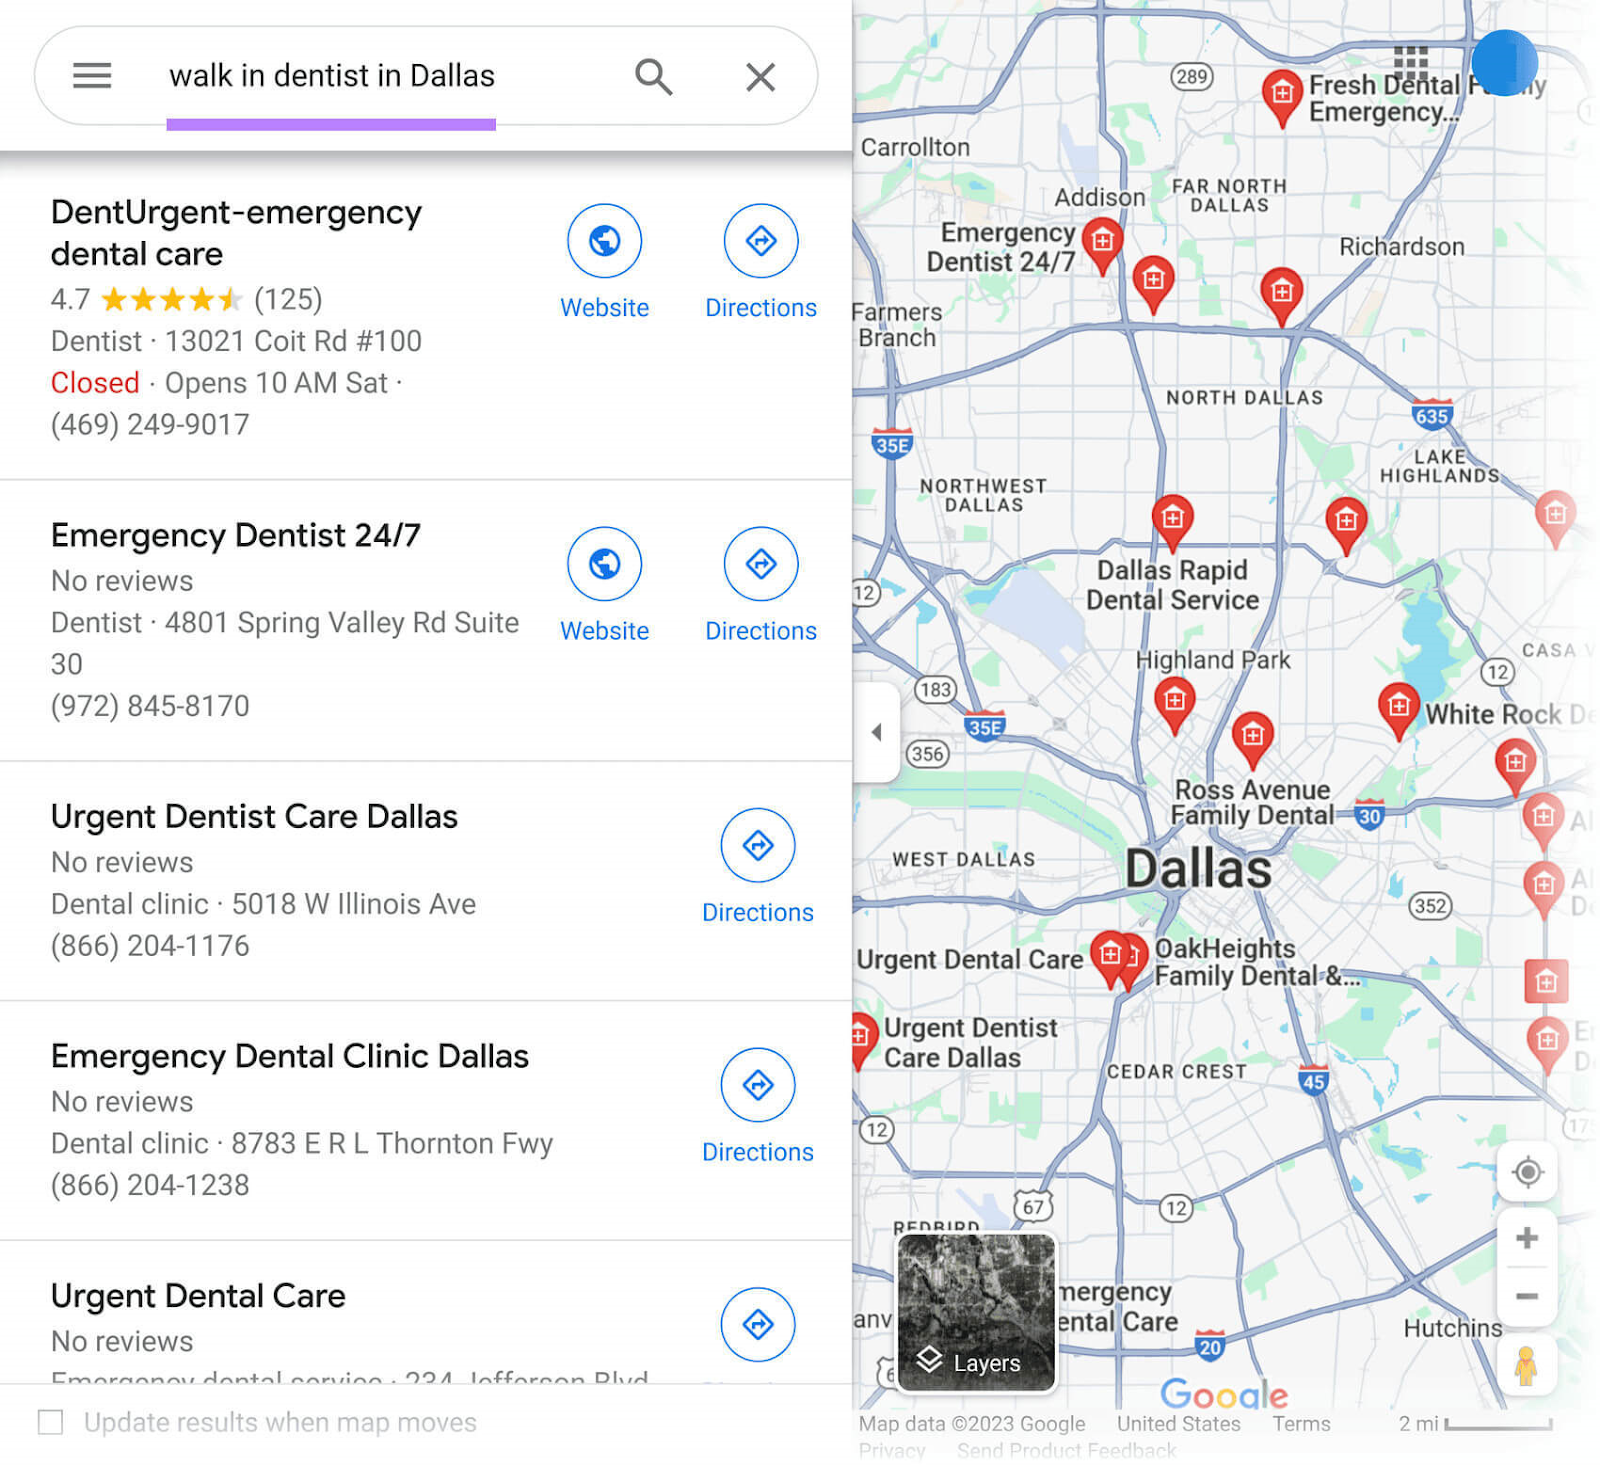 Google Maps results for "walk in dentist in Dallas" query